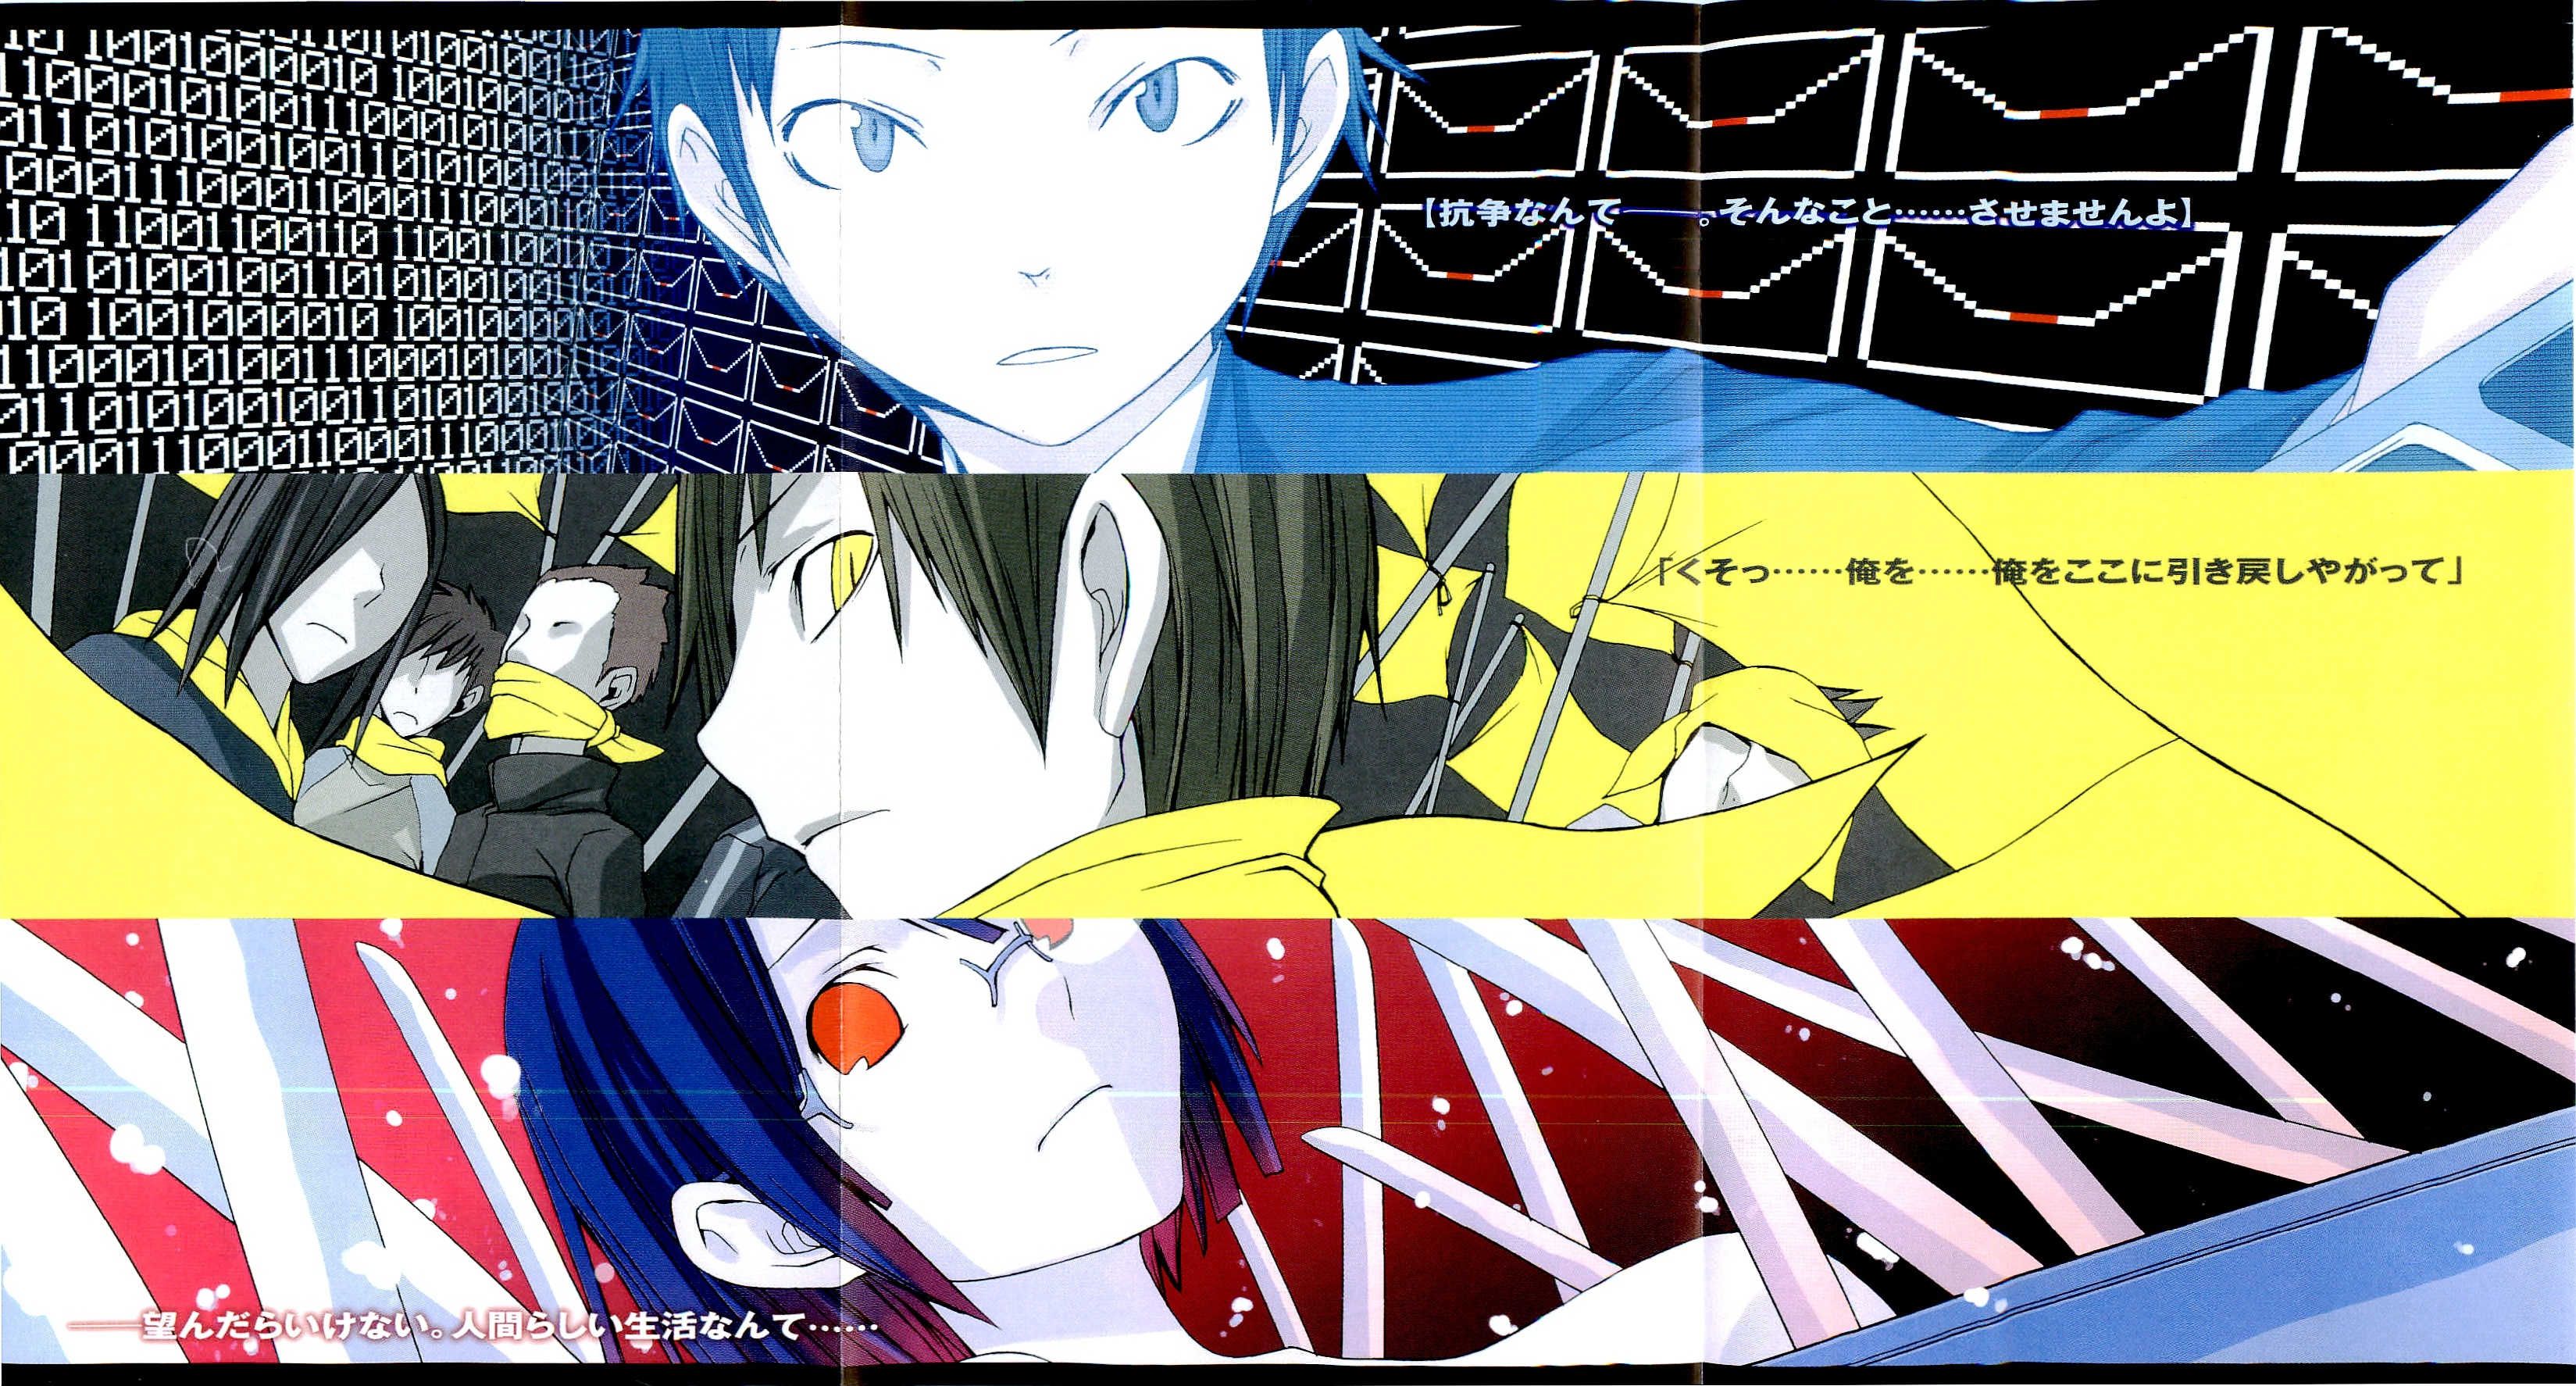 Durarara!! Computer Wallpaper, Desktop Backgroundx1774. Durarara, Durarara wallpaper, Anime